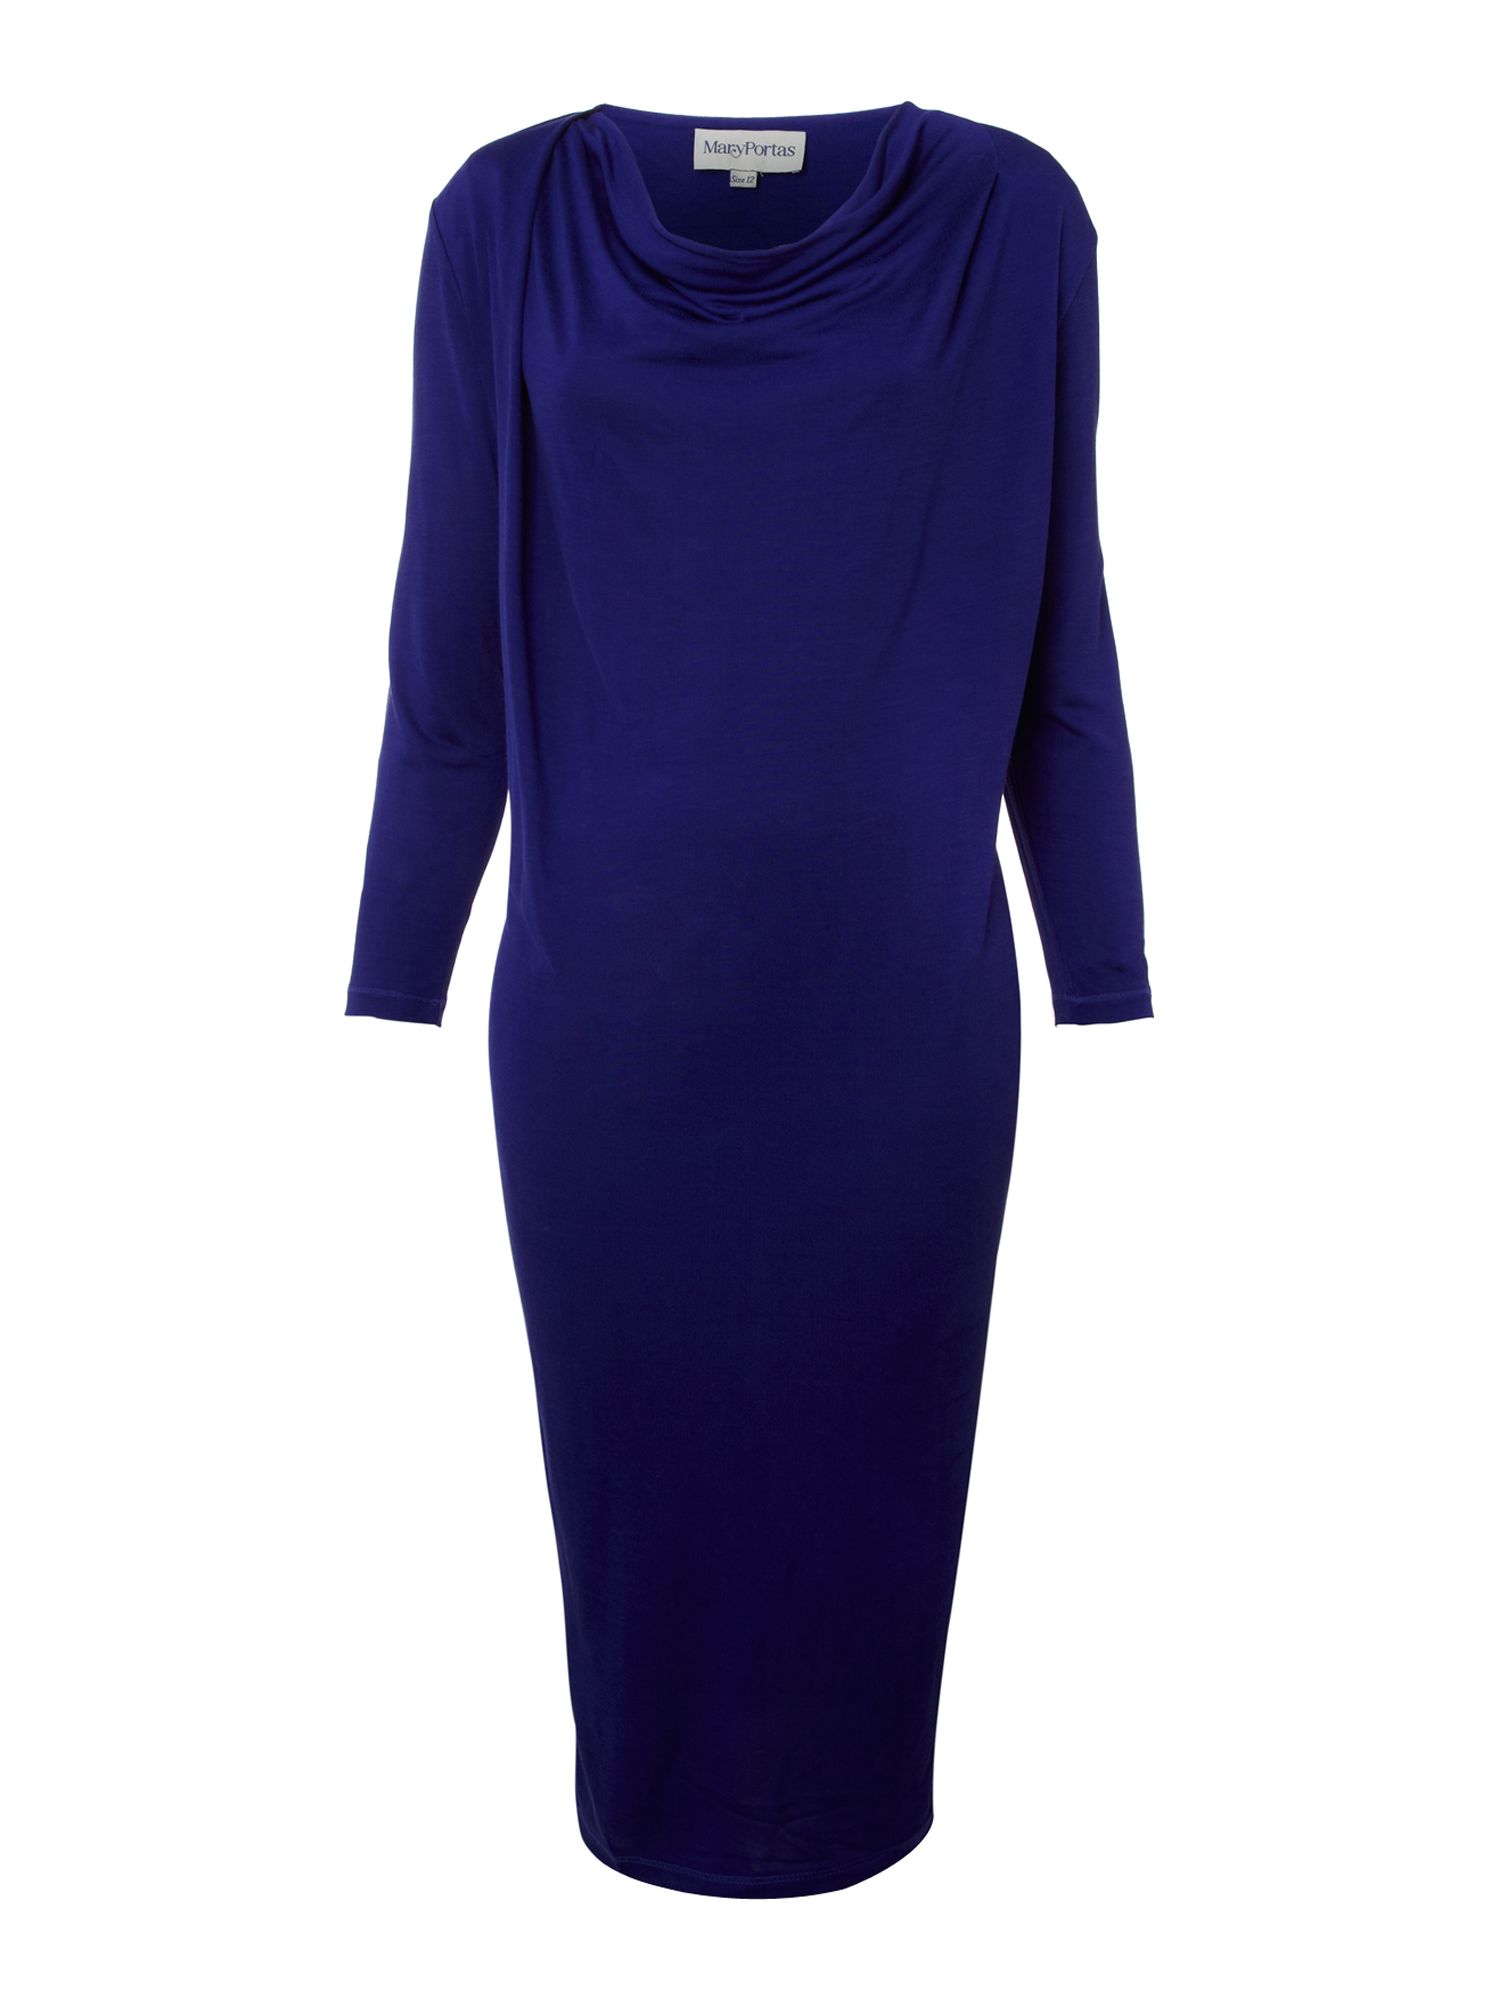 Mary portas Cowl Neck Jersey Dress in Purple | Lyst